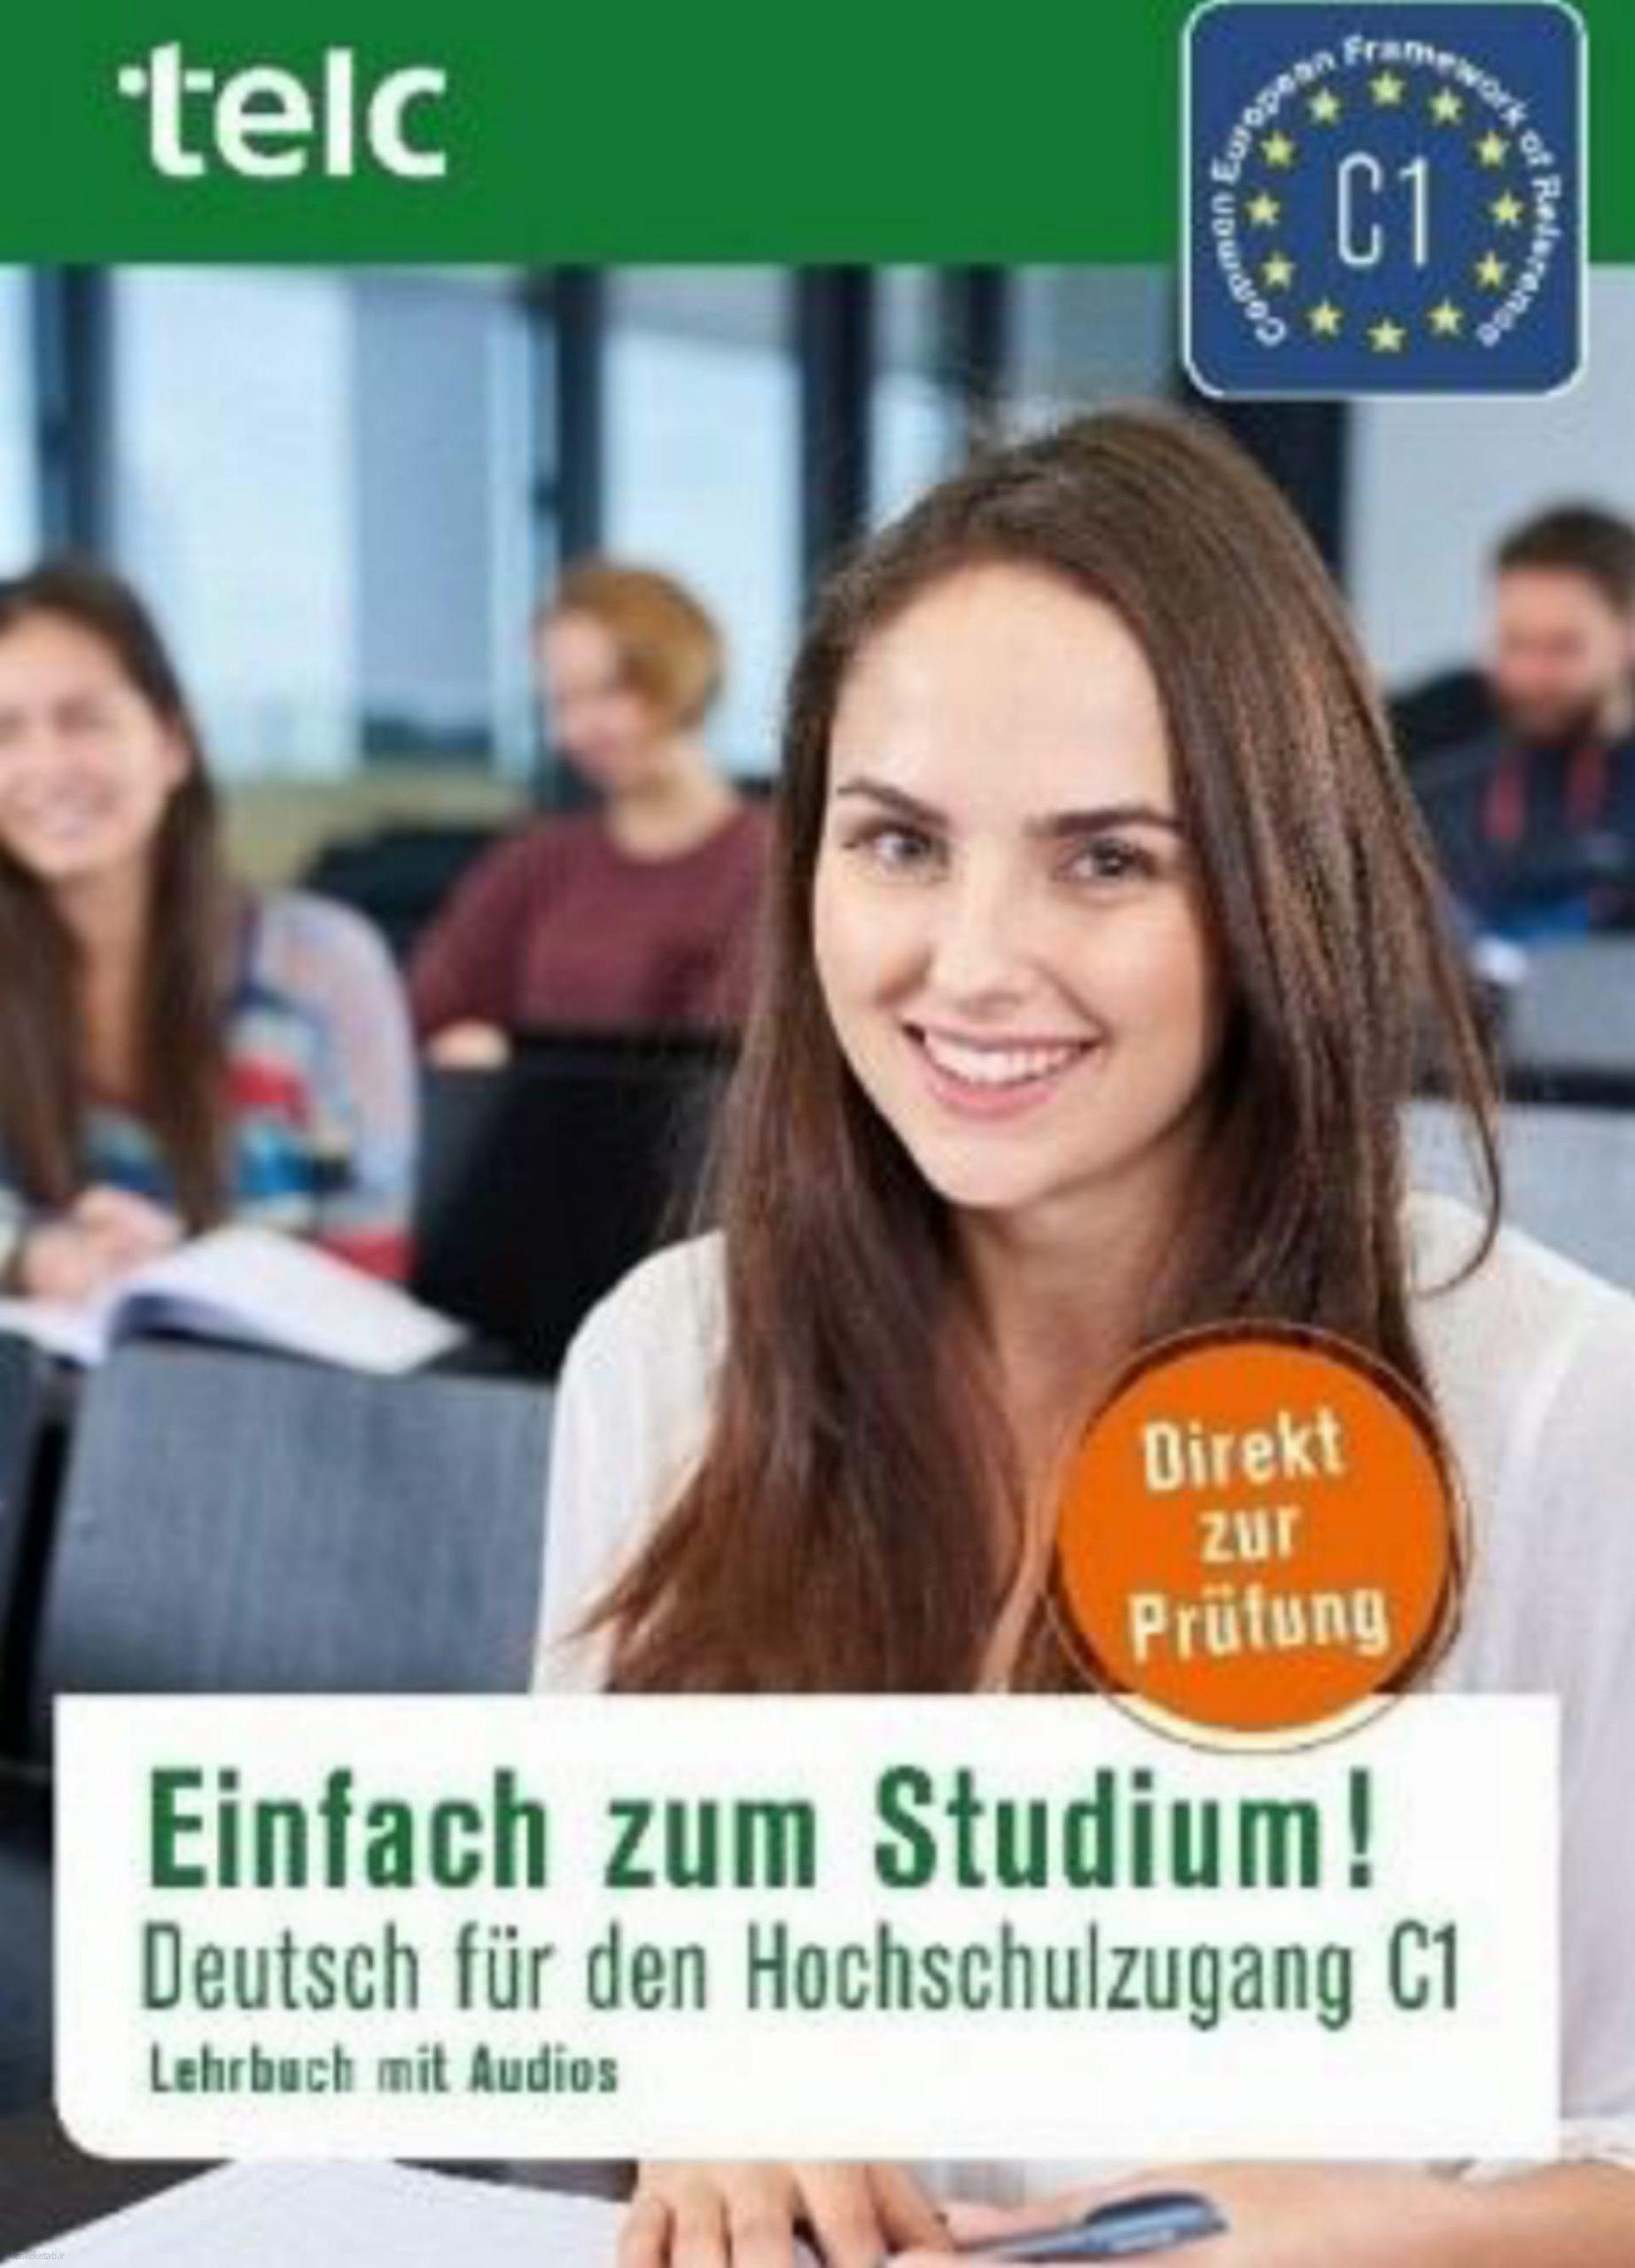 دانلود کتاب آلمانیtelc_C1_Einfach zum Studium!